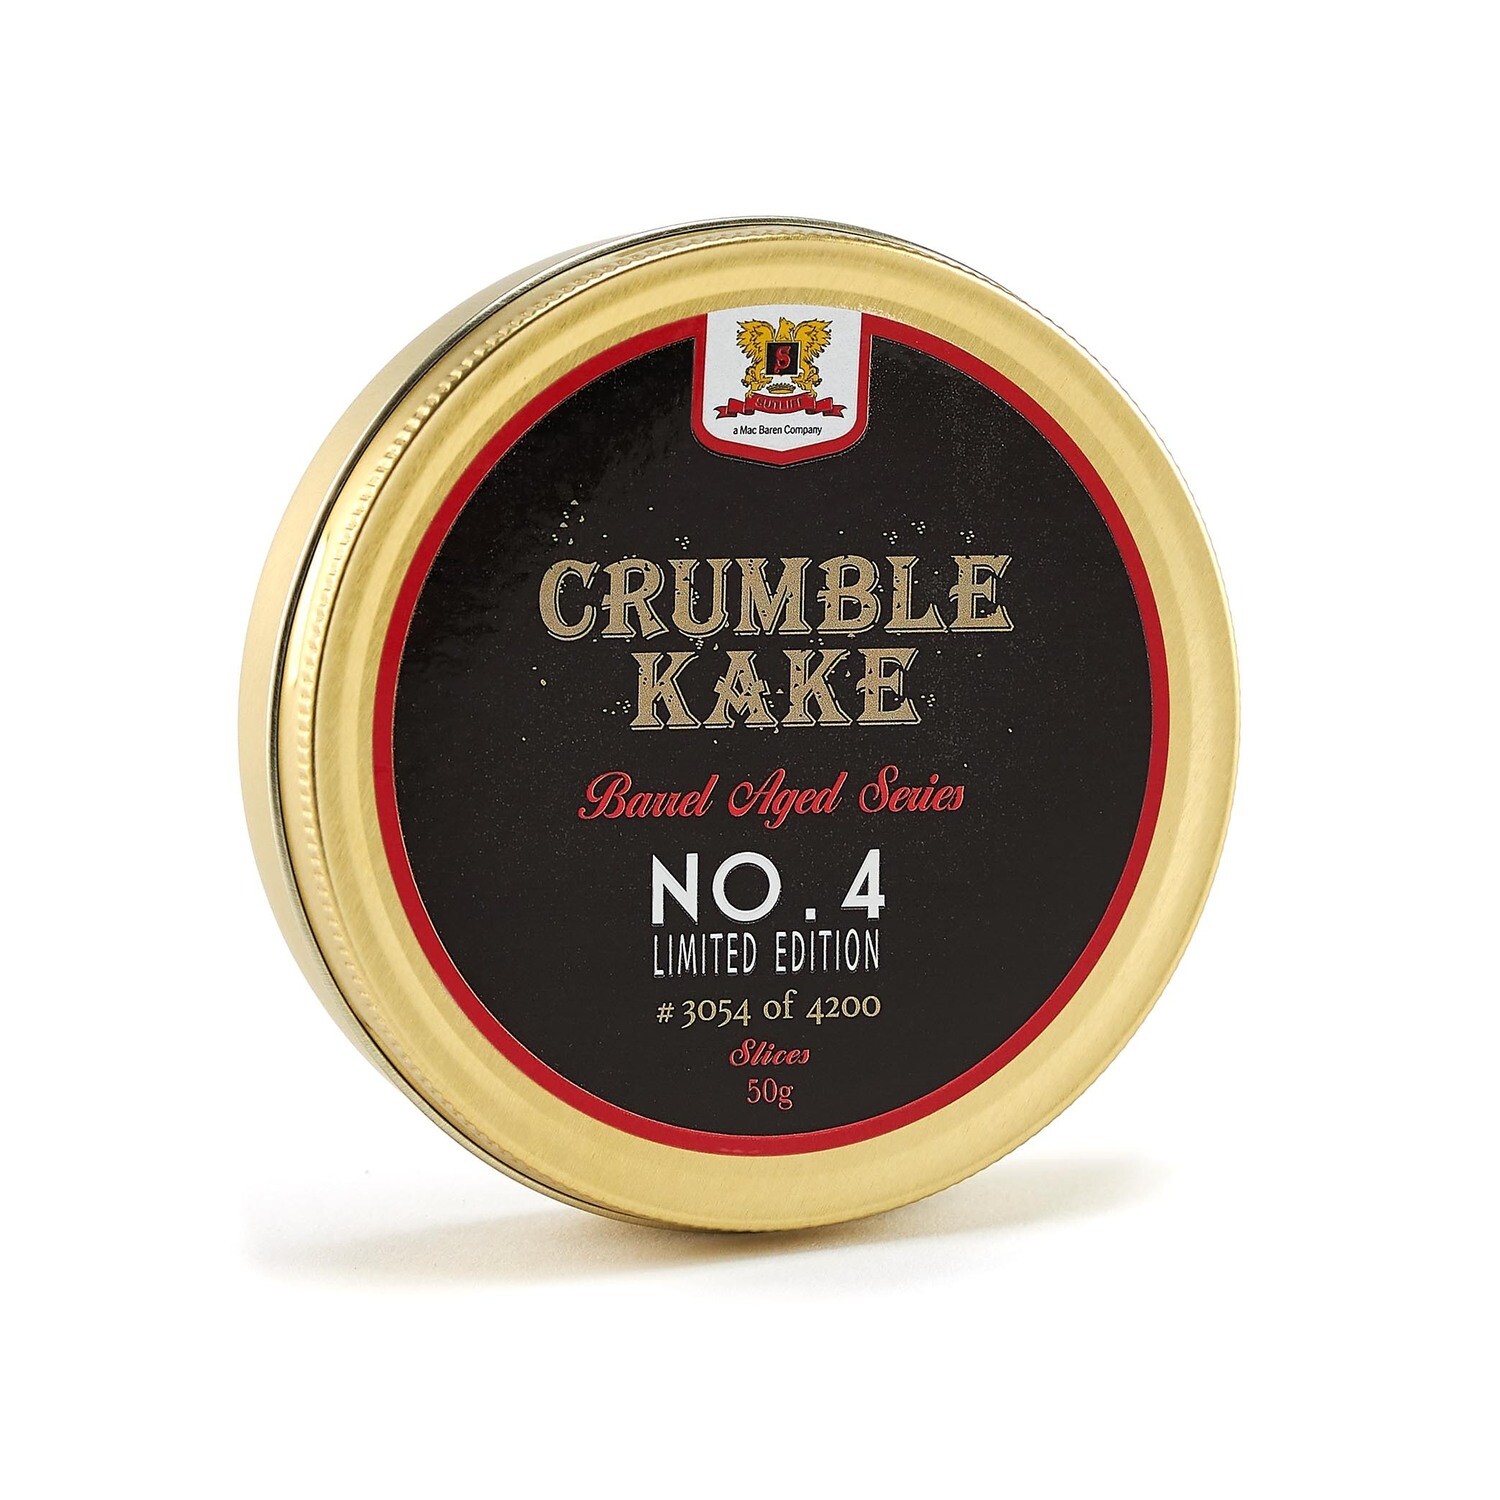 Sutliff Crumble Kake Barrel Aged Series No. 4 Limited Edition tin